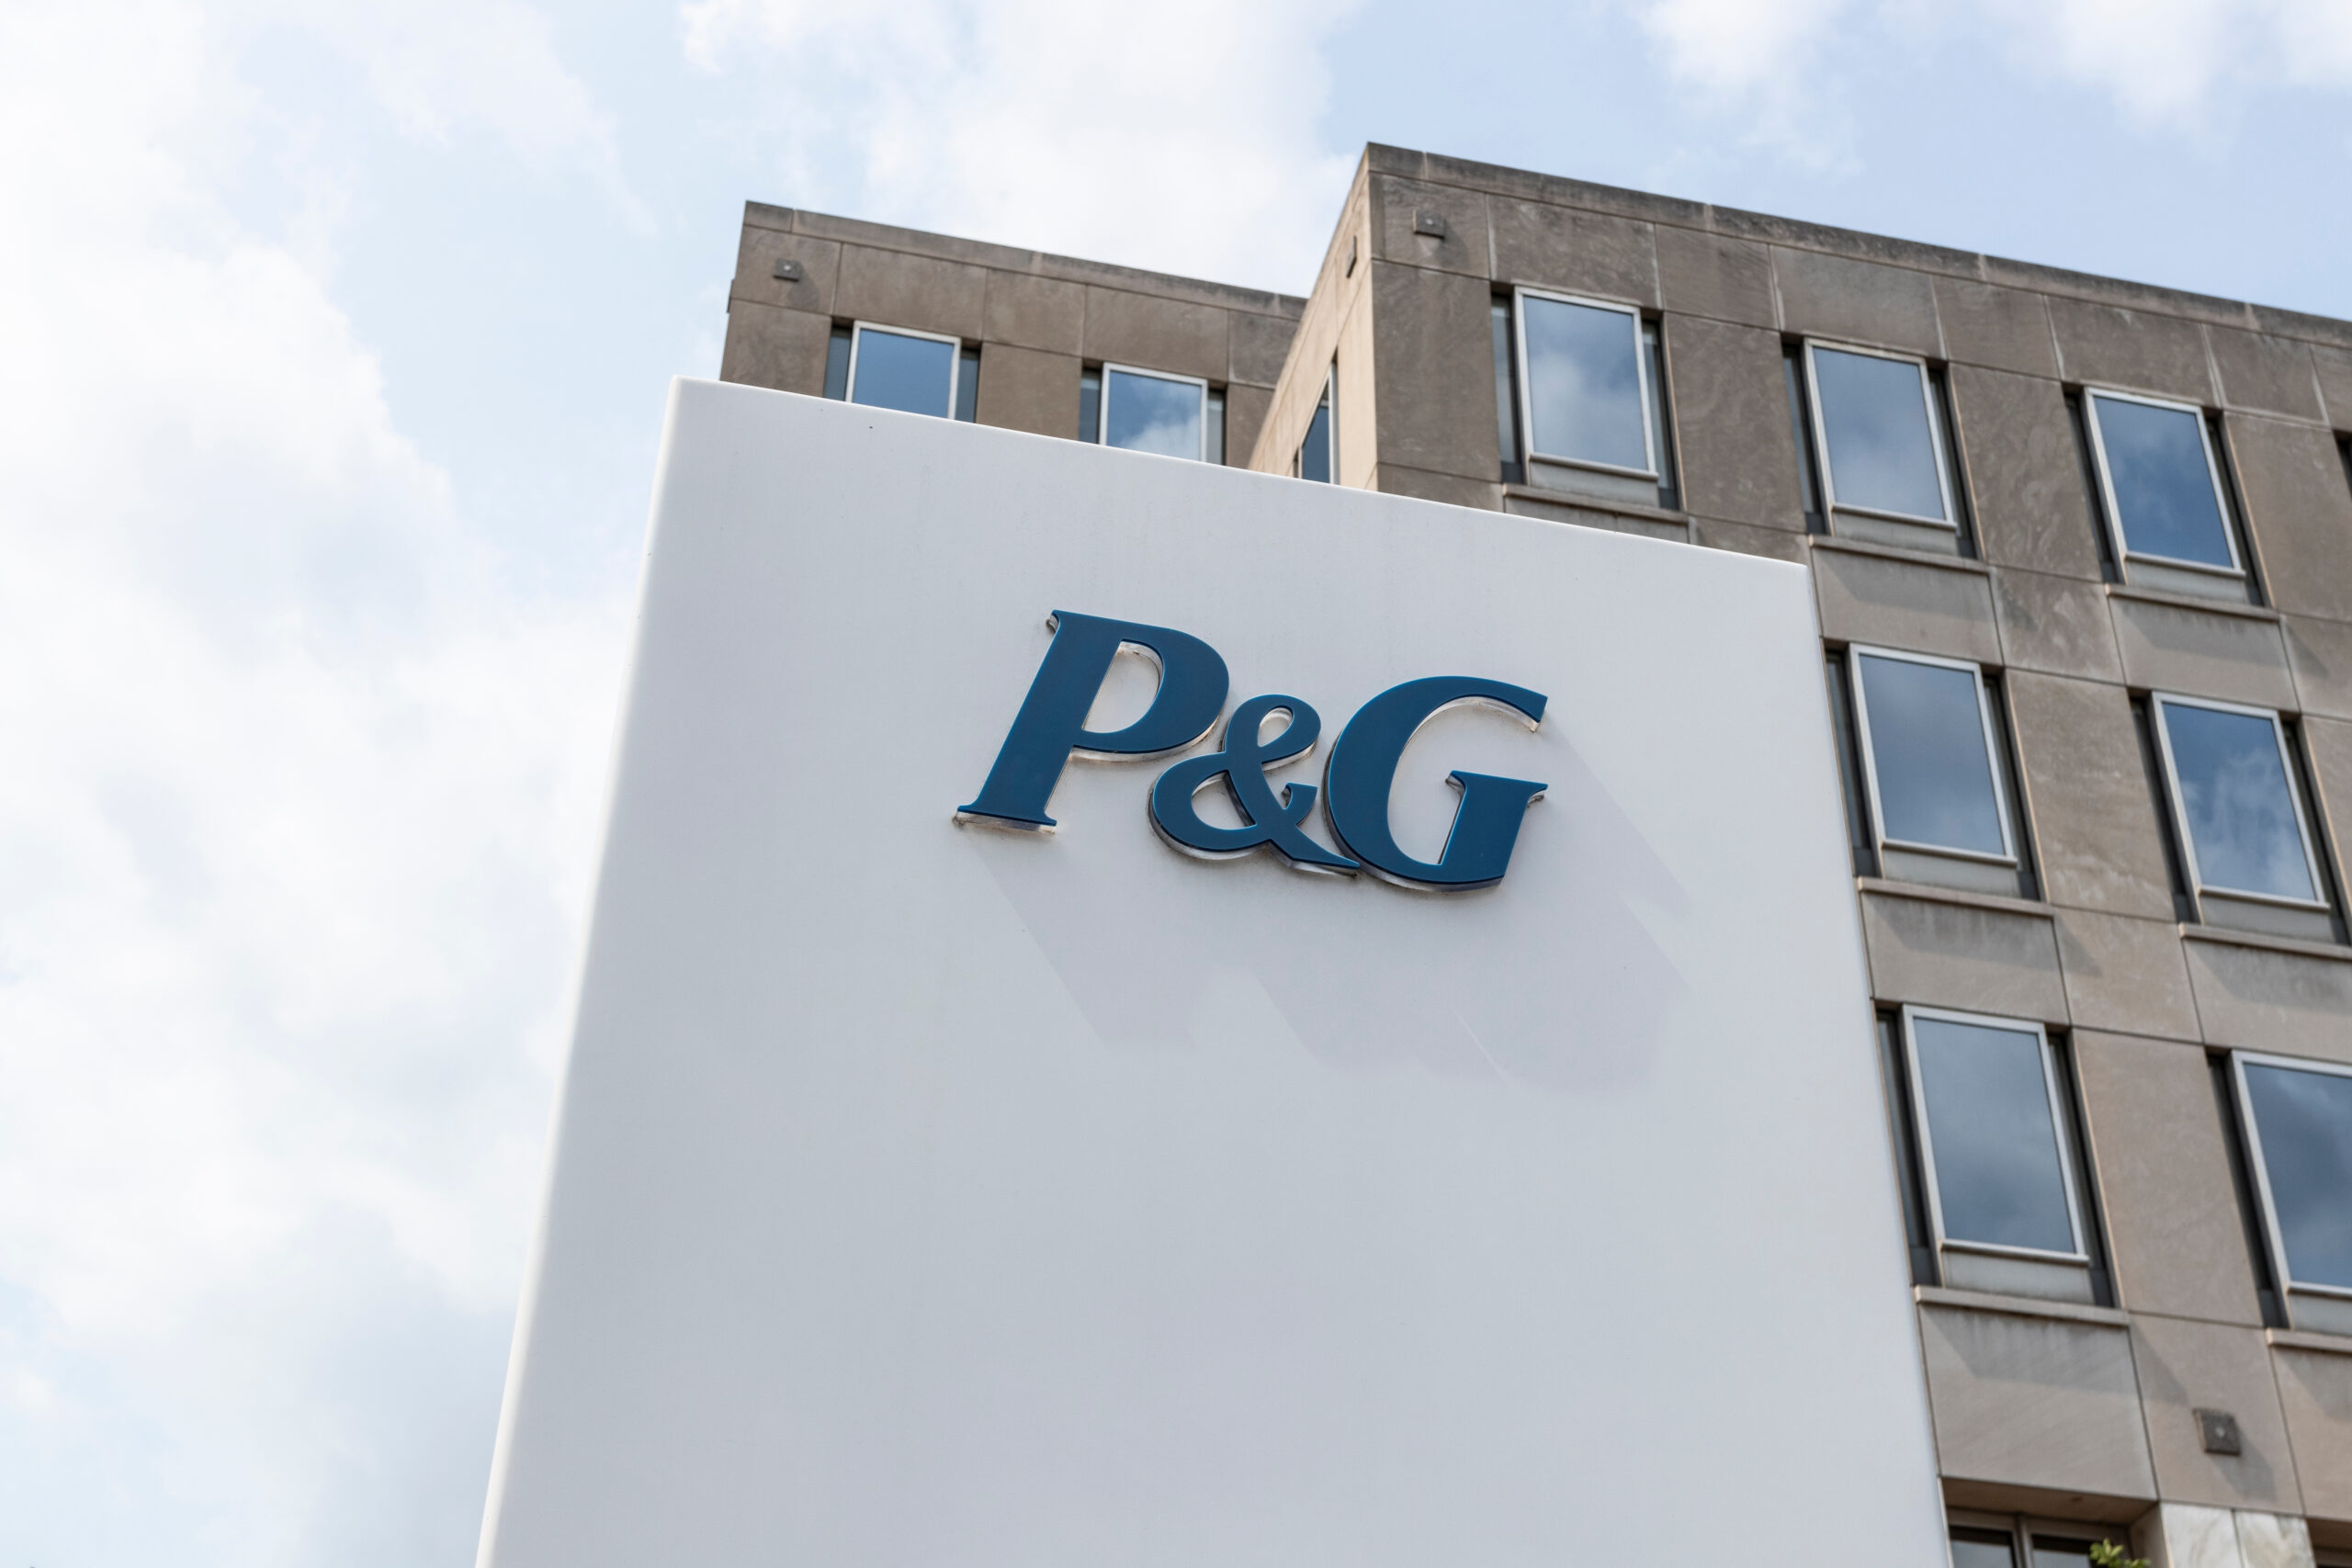 P&G Brands  Good Everyday